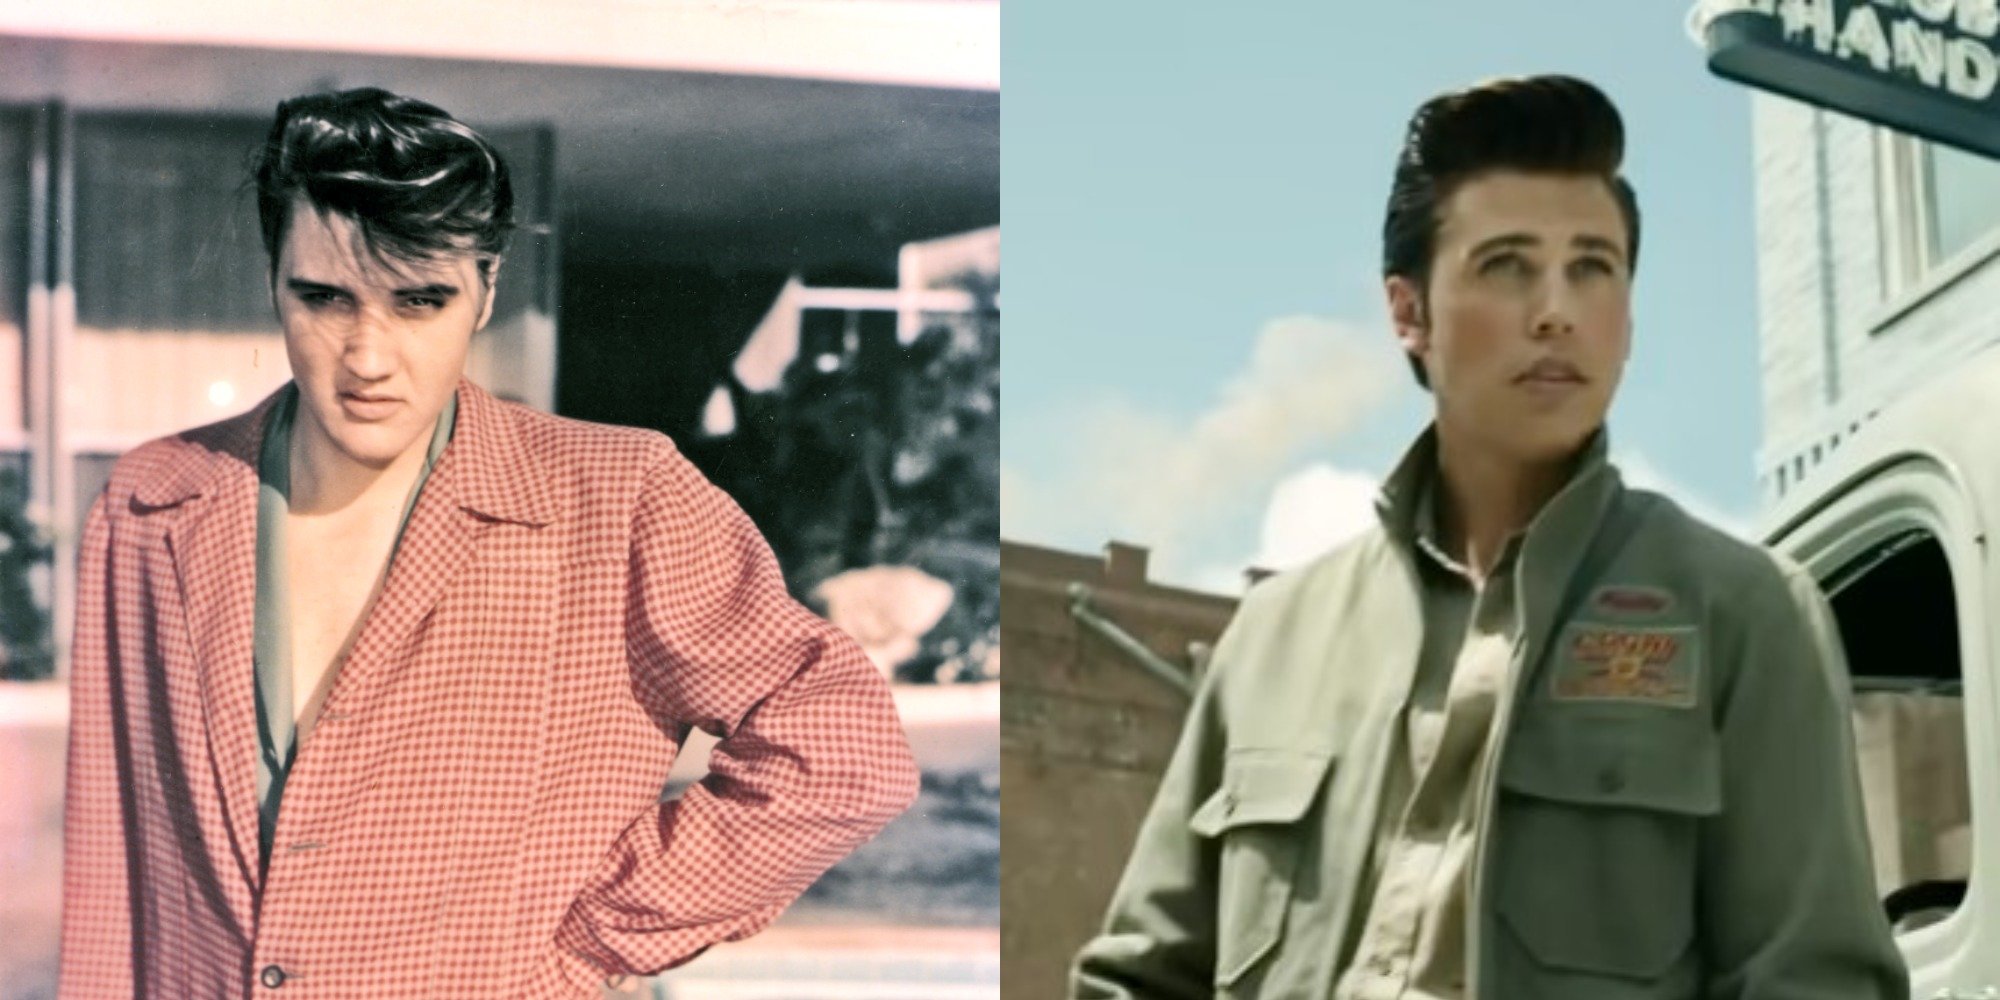 Elvis Presley and Austin Butler in side-by-side photographs.